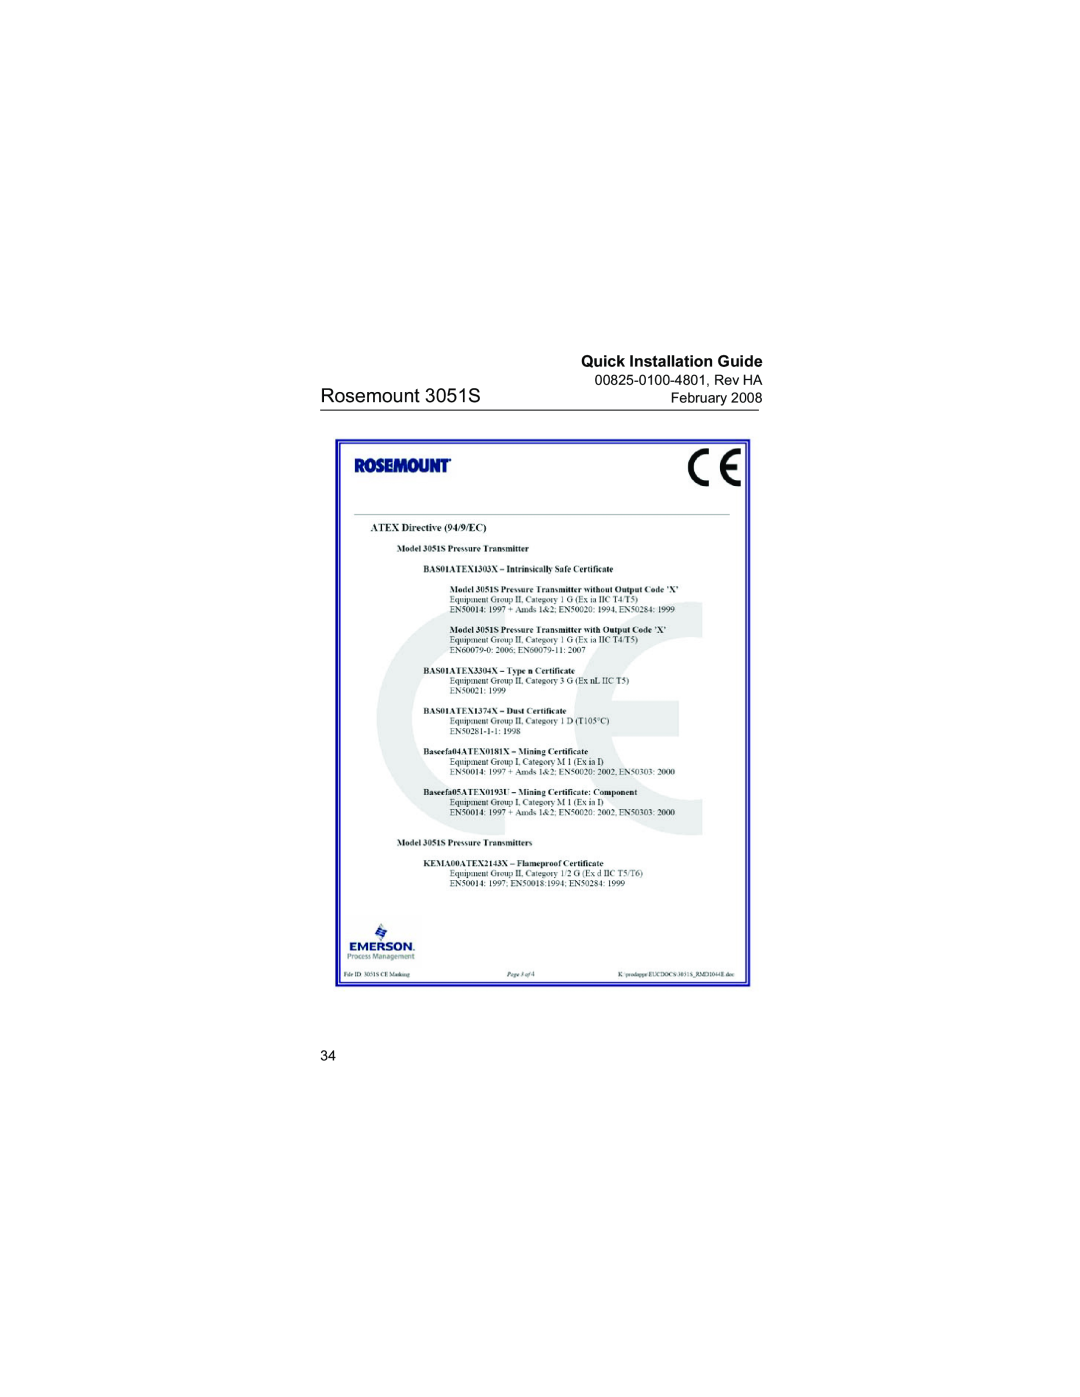 Emerson manual Rosemount 3051S, Quick Installation Guide, 00825-0100-4801, Rev HA February 